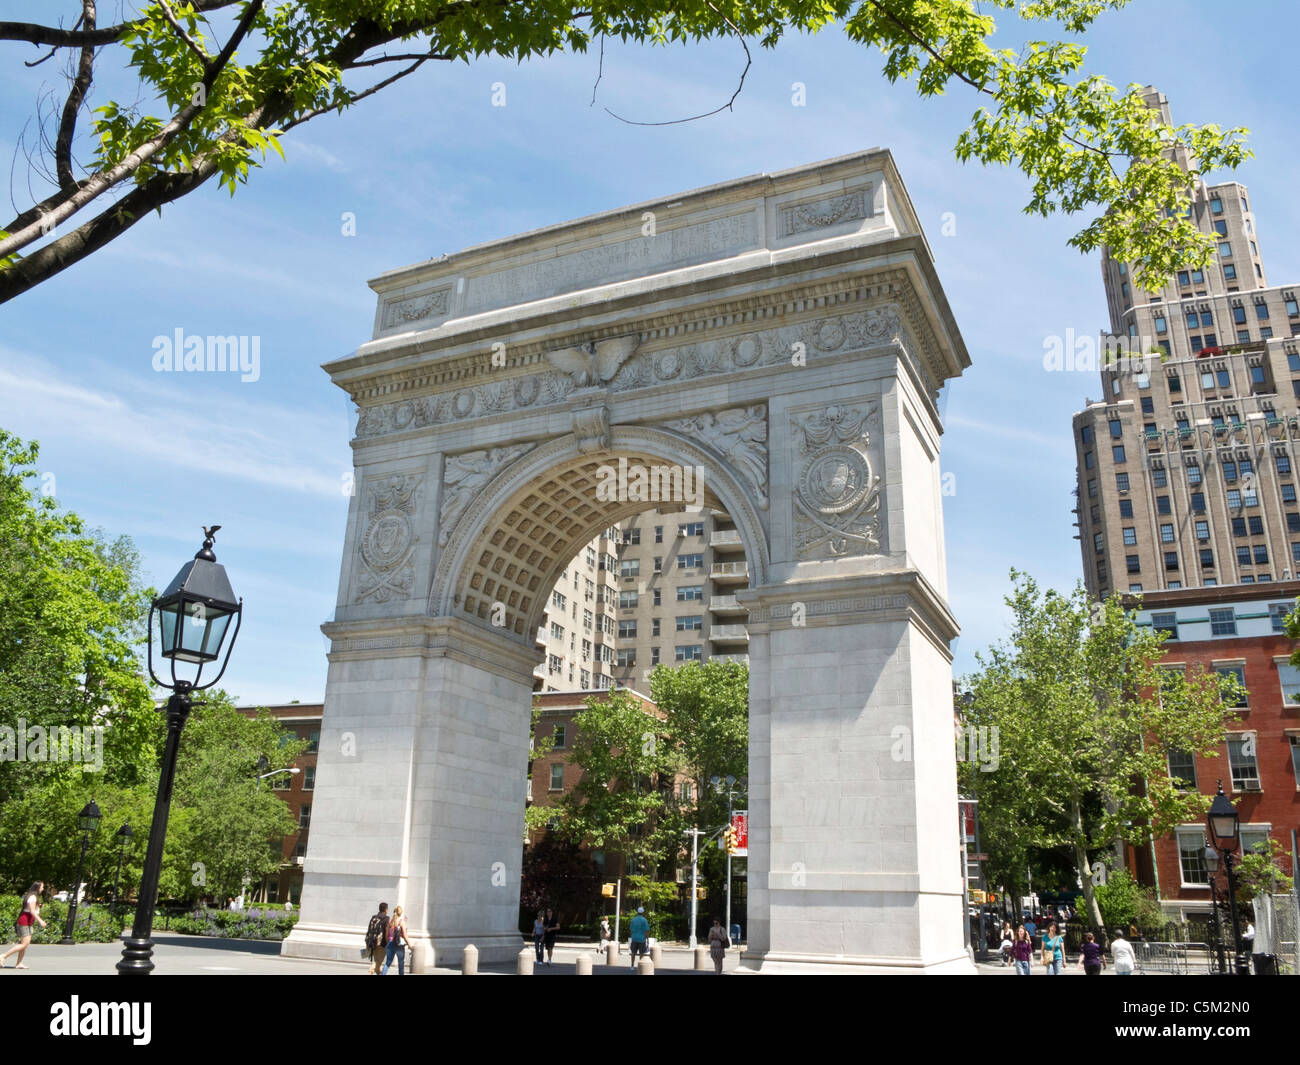 Washington Square Arch, Washington Square Park, Greenwich Village, NEW YORK Banque D'Images